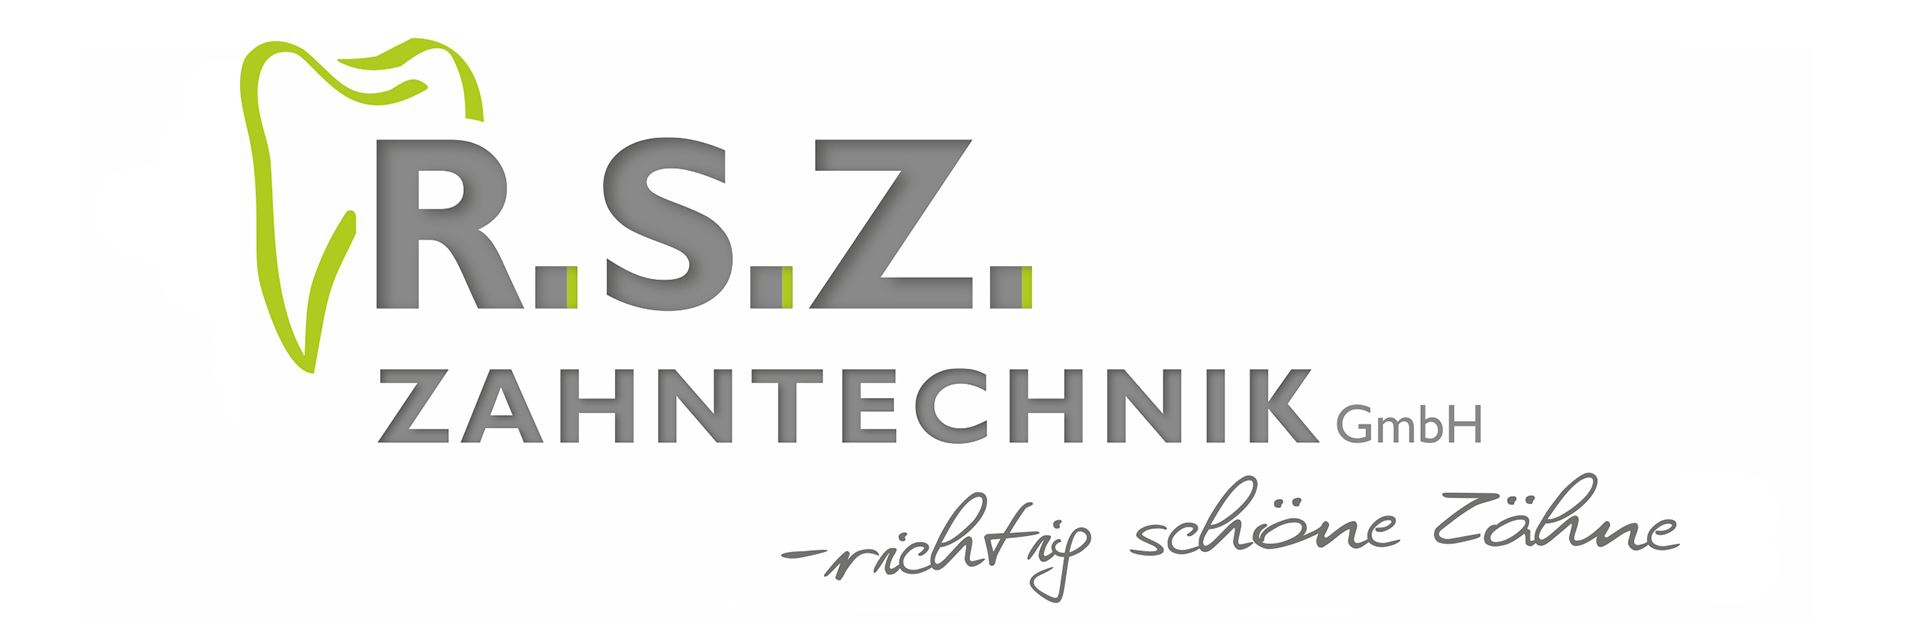 R.S.Z. Zahntechnik GmbH